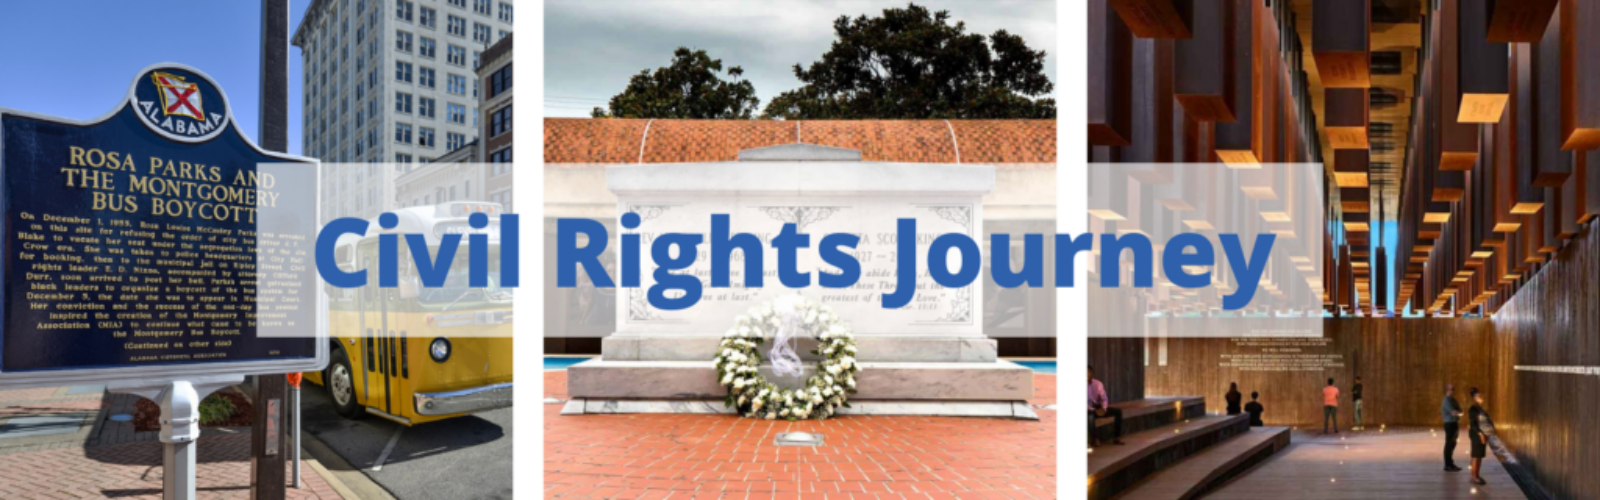 Civil Rights Journey